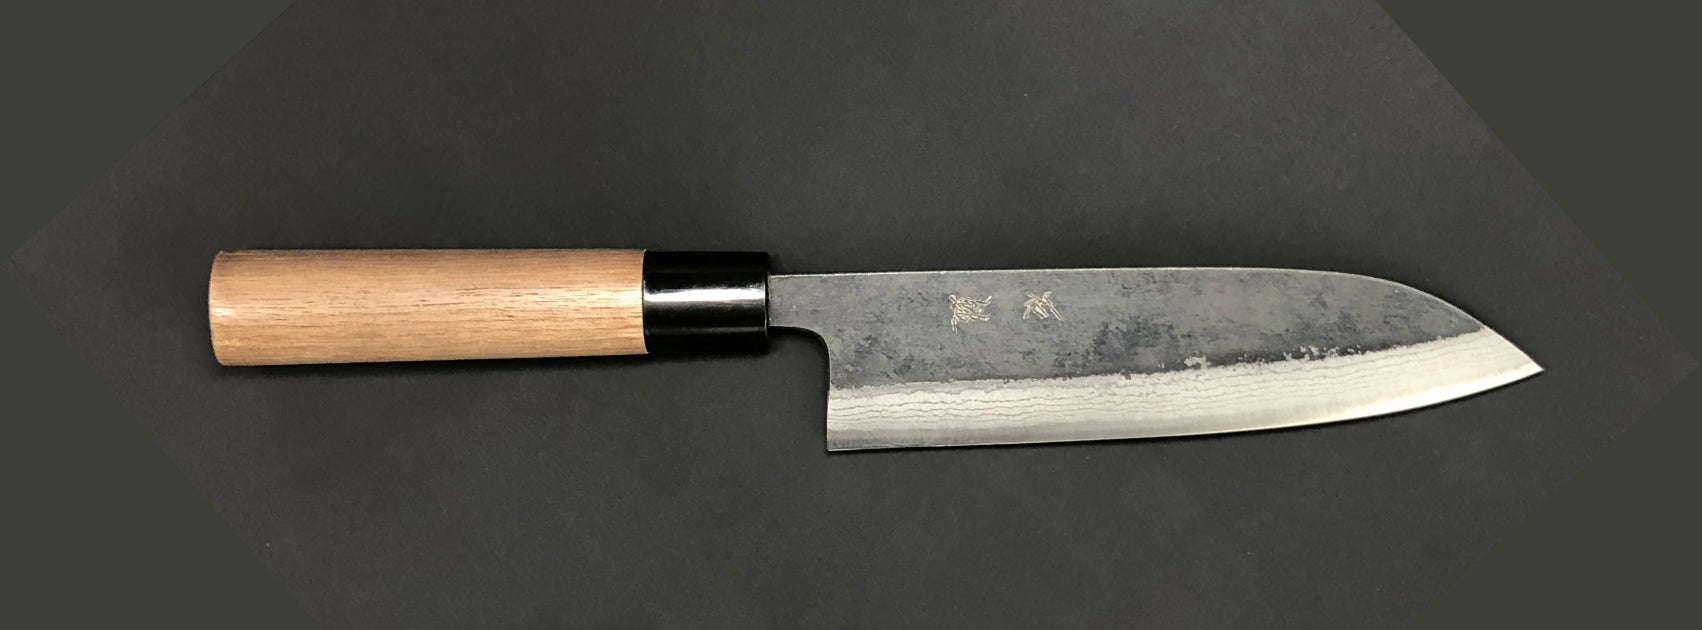 Nakano Knives Santoku Knife